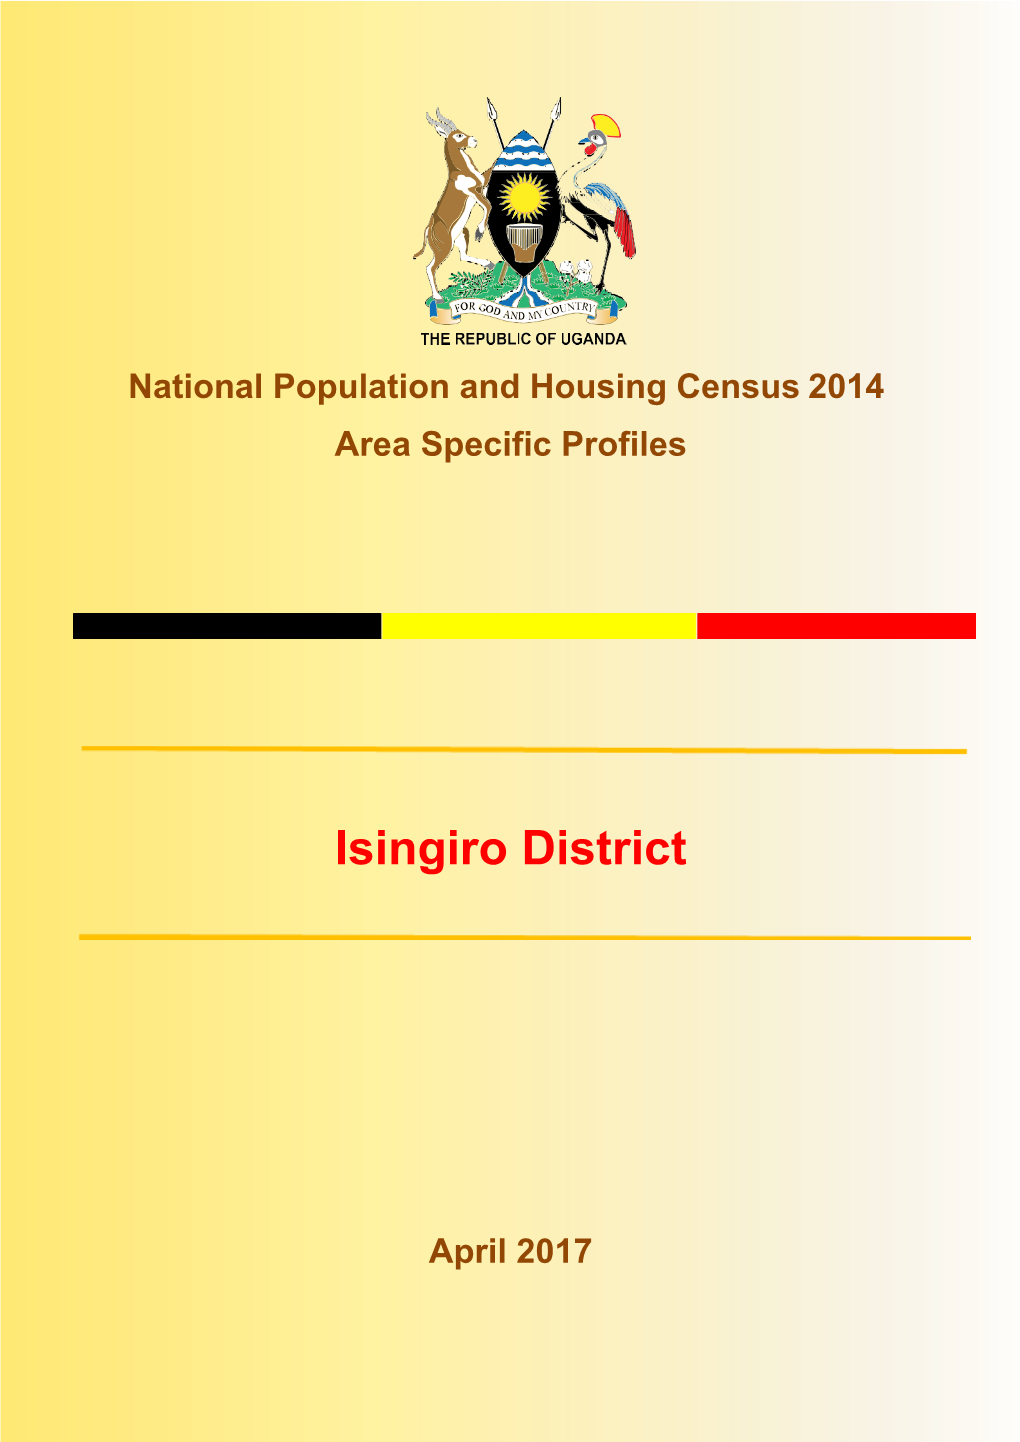 Isingiro District